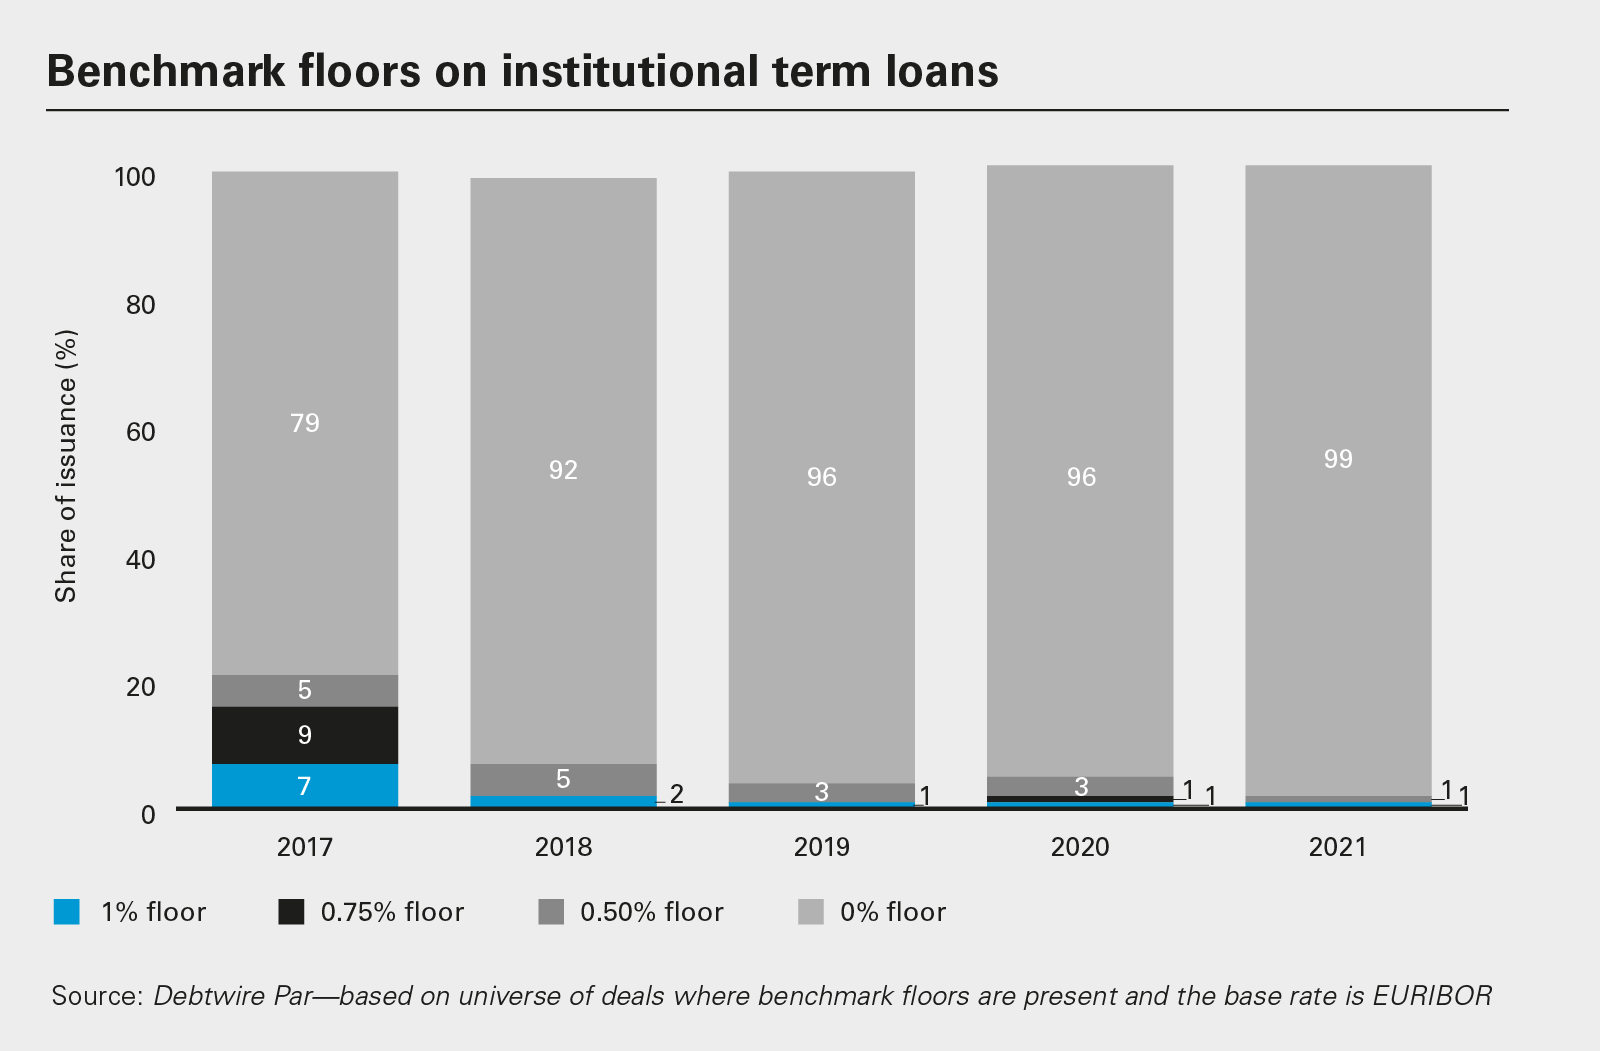 Benchmark floors on institutional term loans